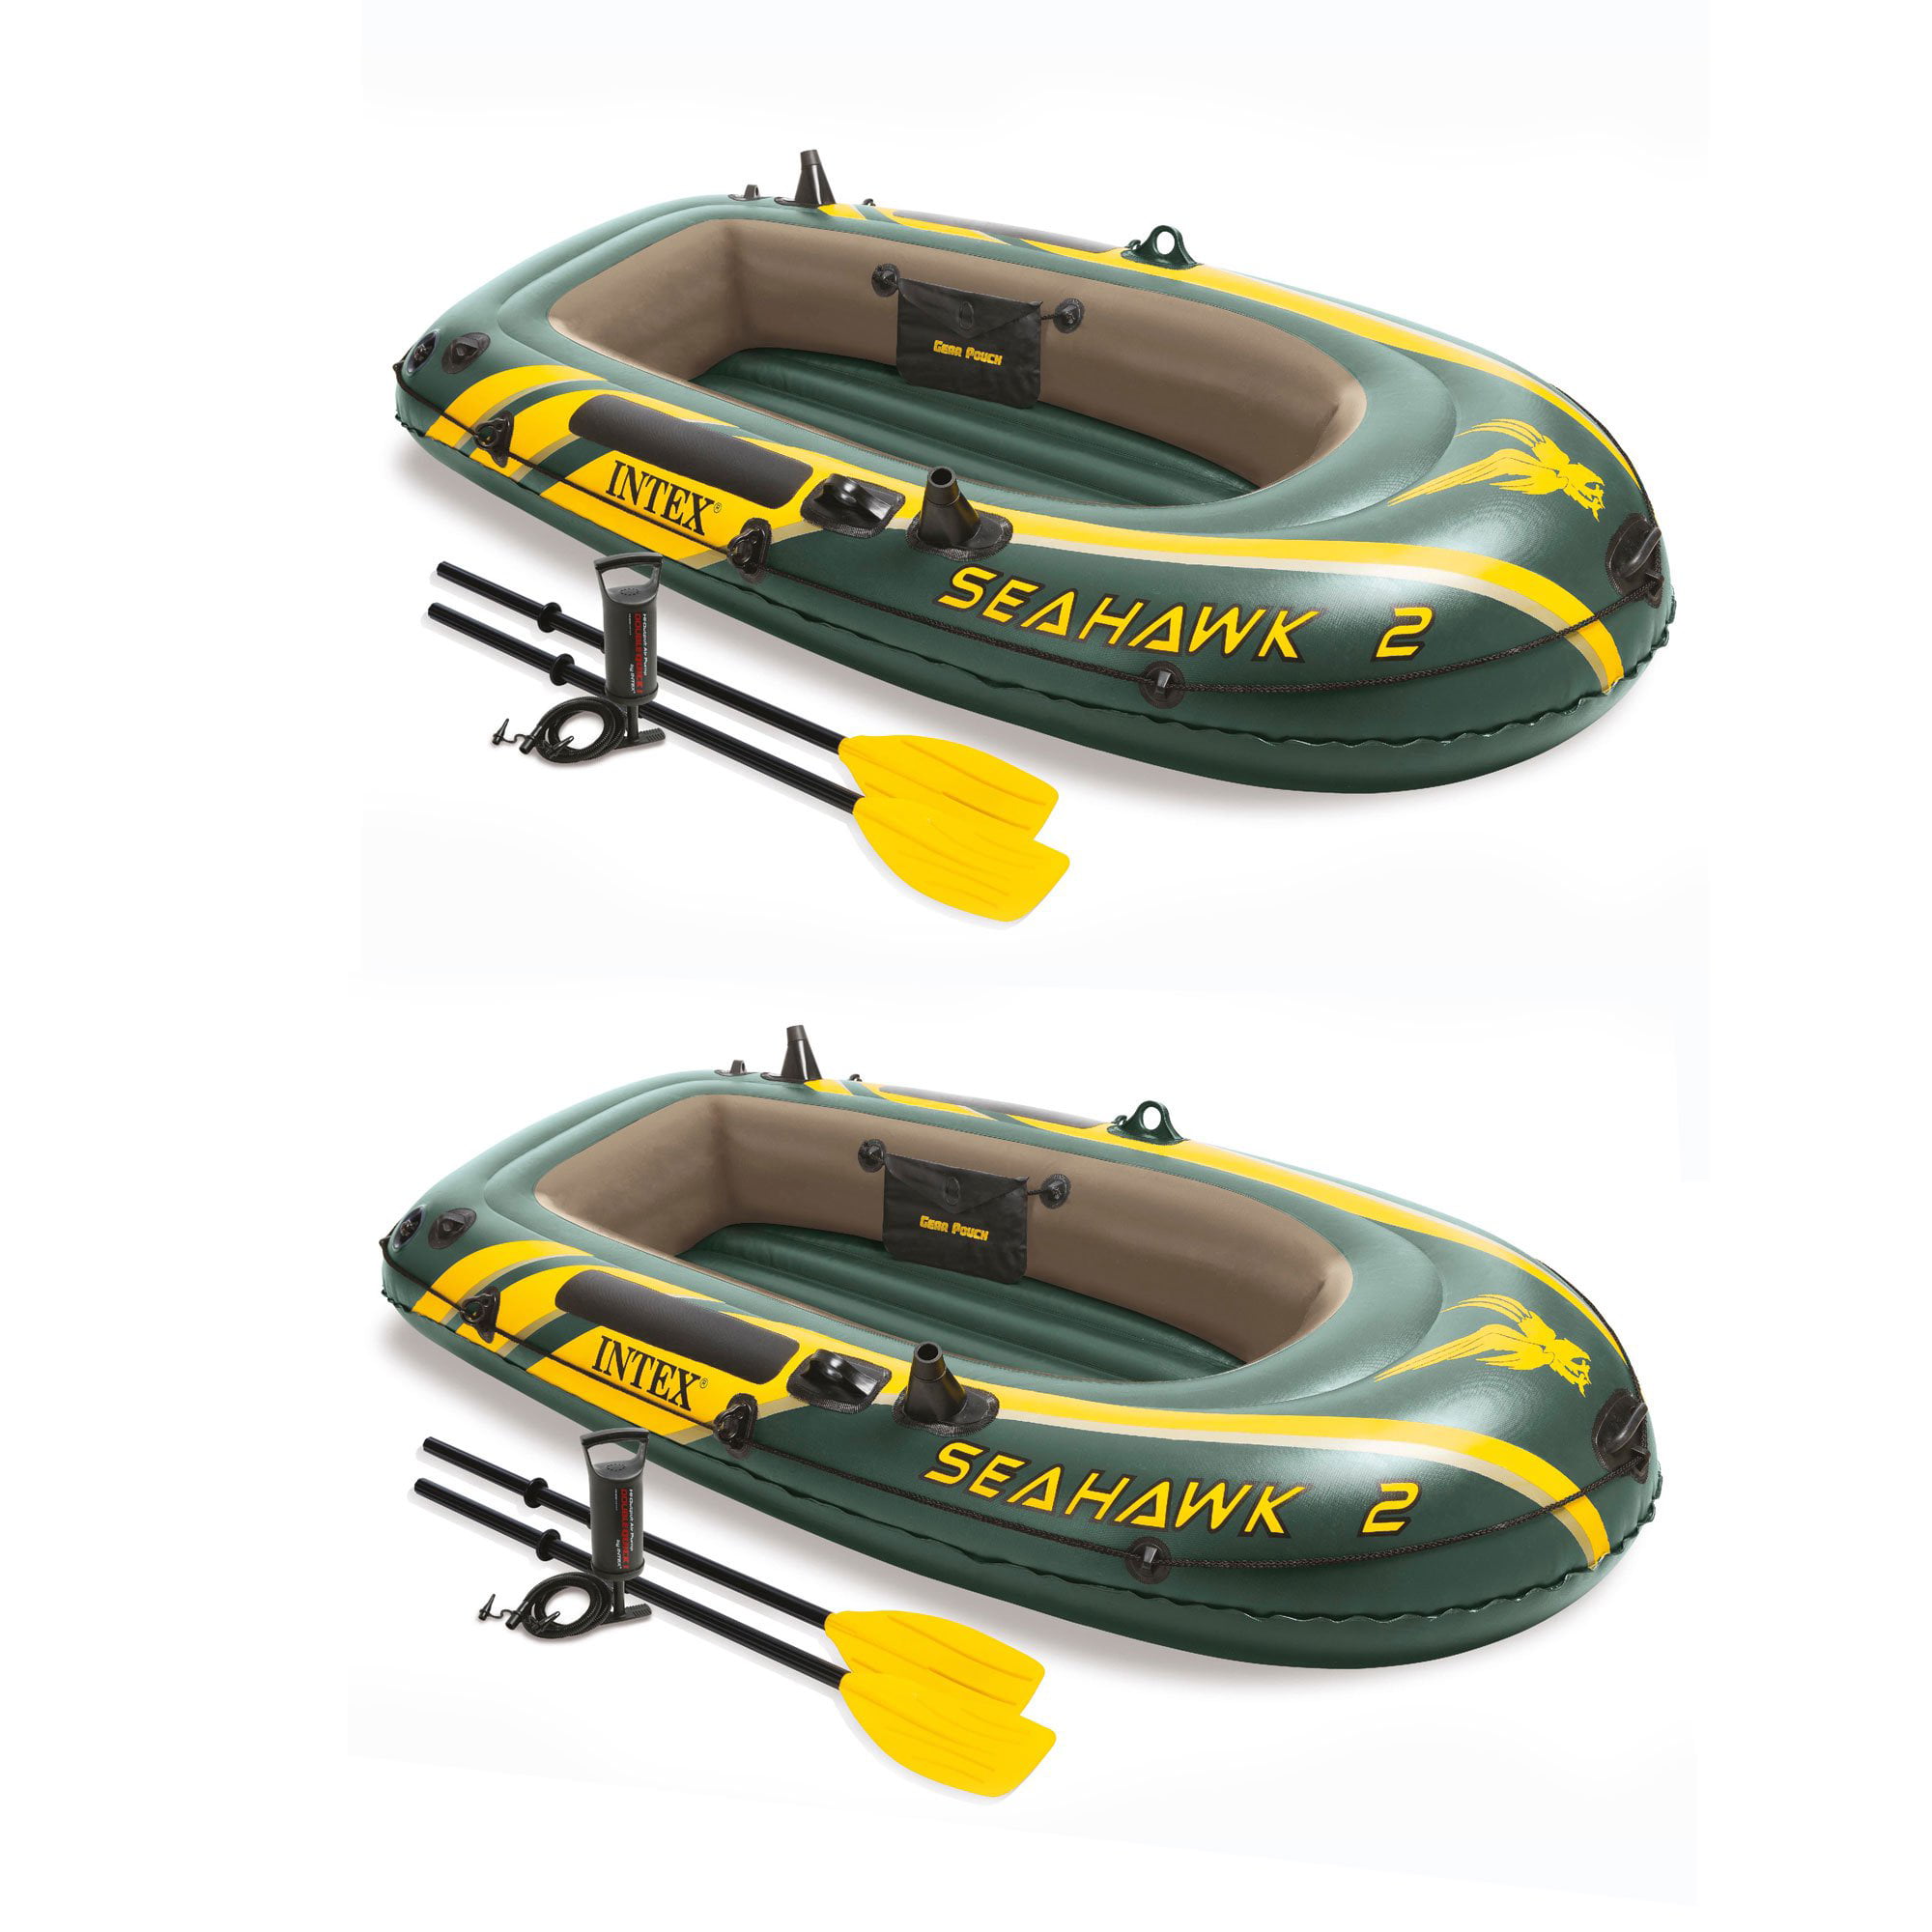 Rowing Boat For Sale 4 People W/Oars &Air Pump Intex Seahawk W/Vest Life Jacket 